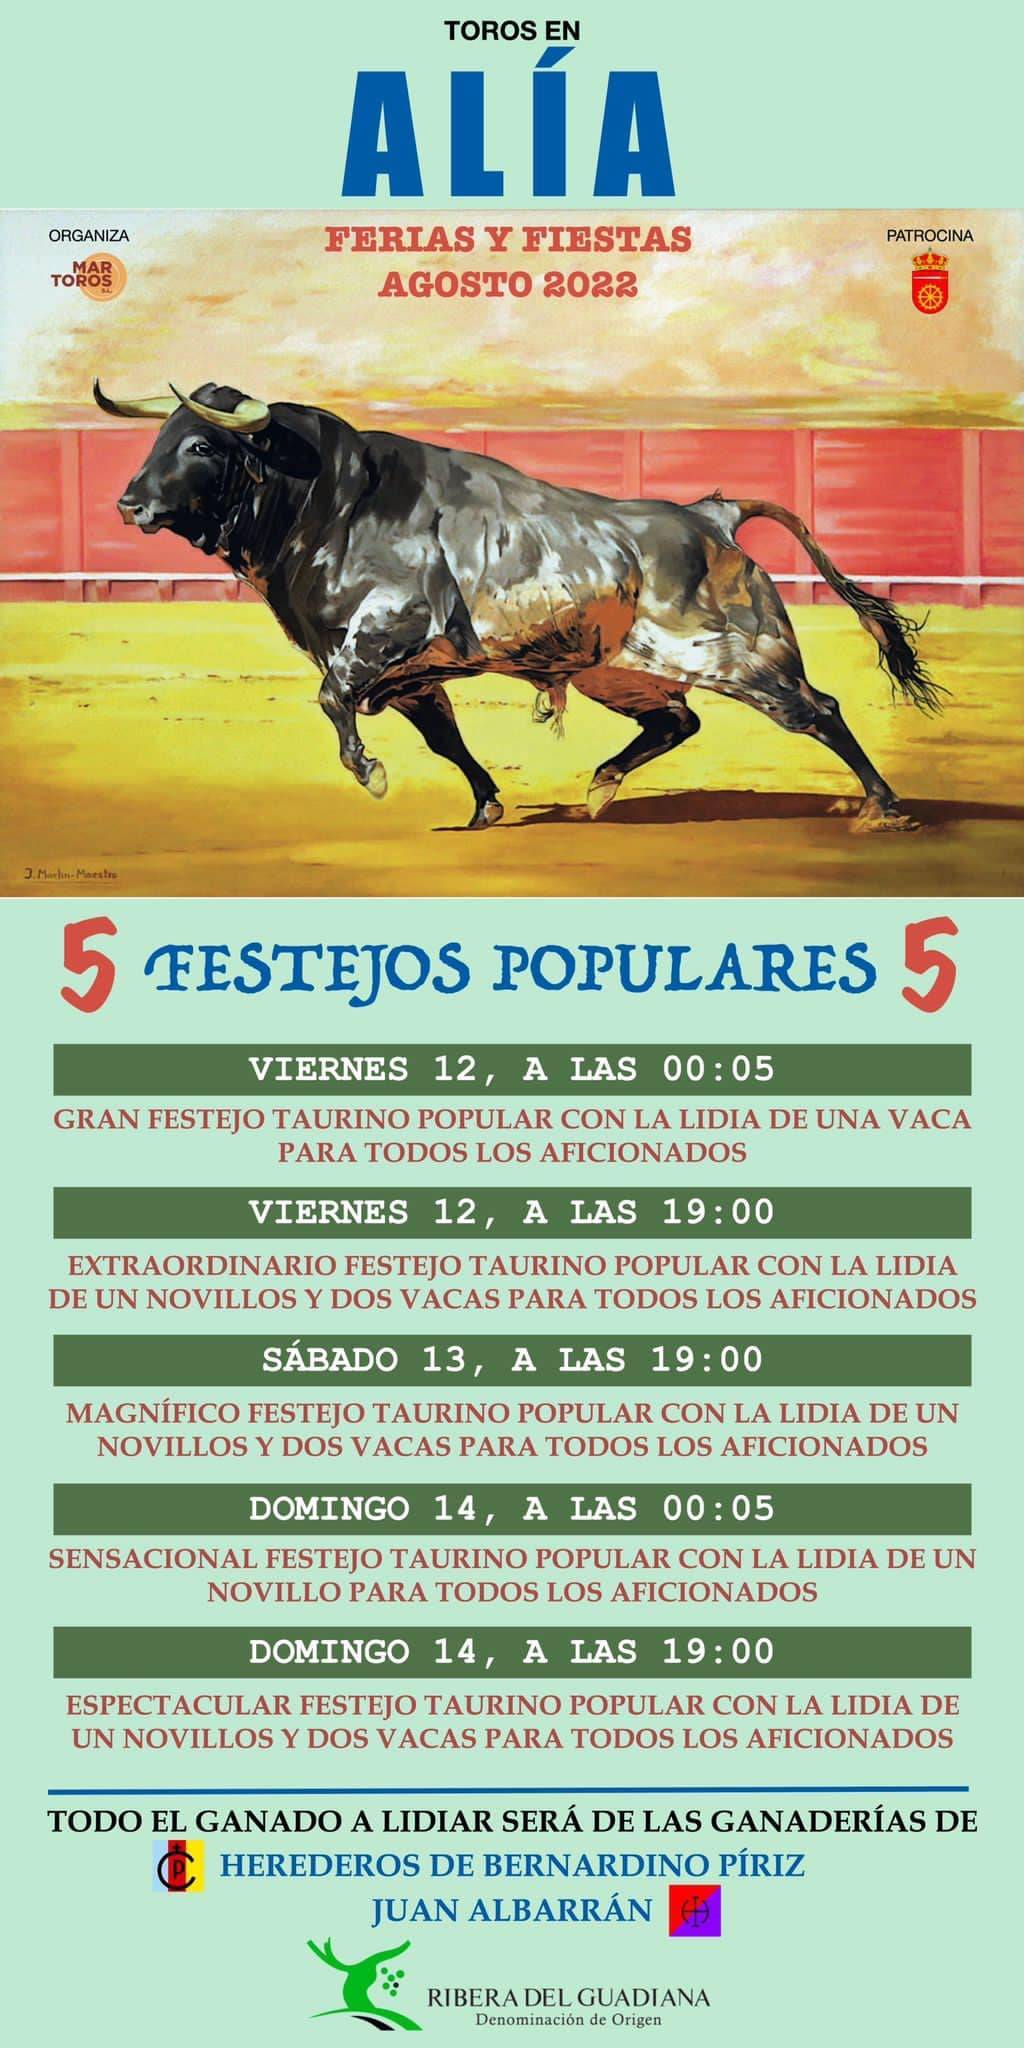 Festejos taurinos (2022) - Alía (Cáceres)